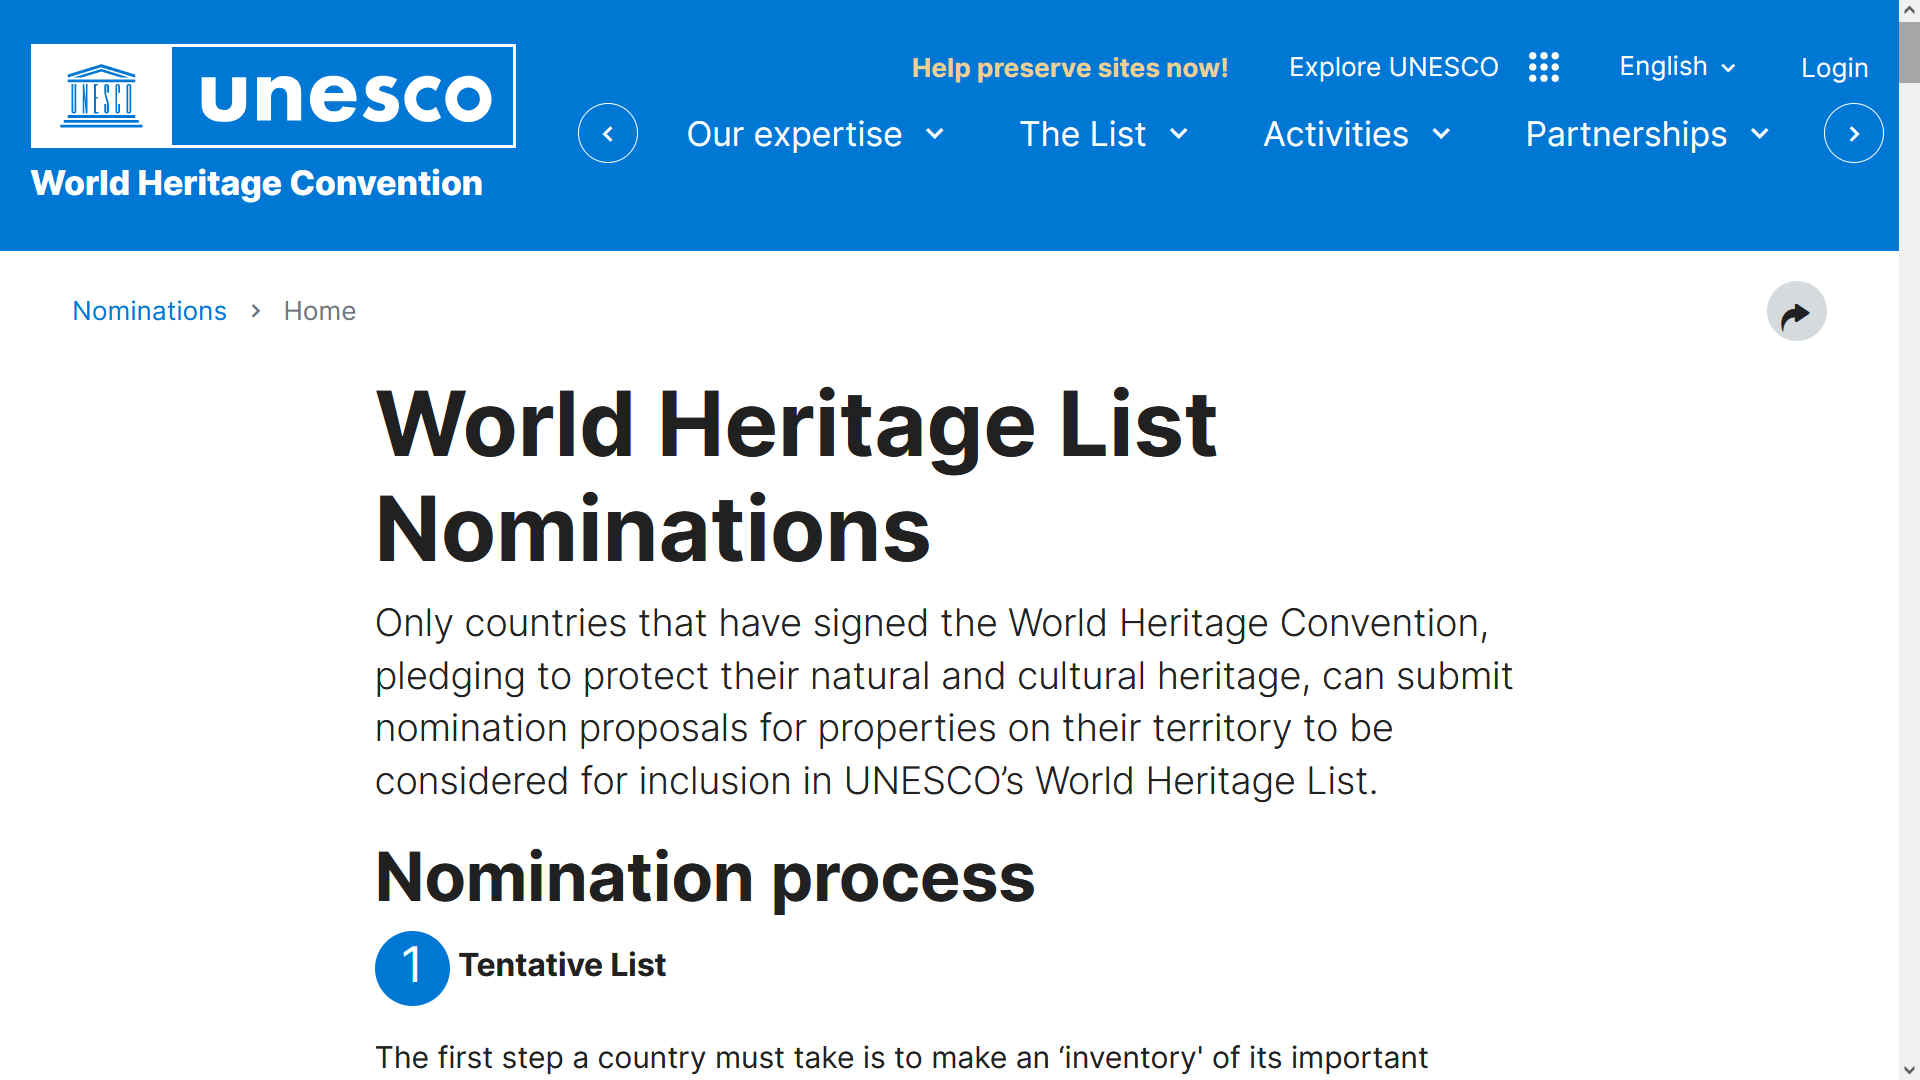 World Heritage List nominations selection criteria